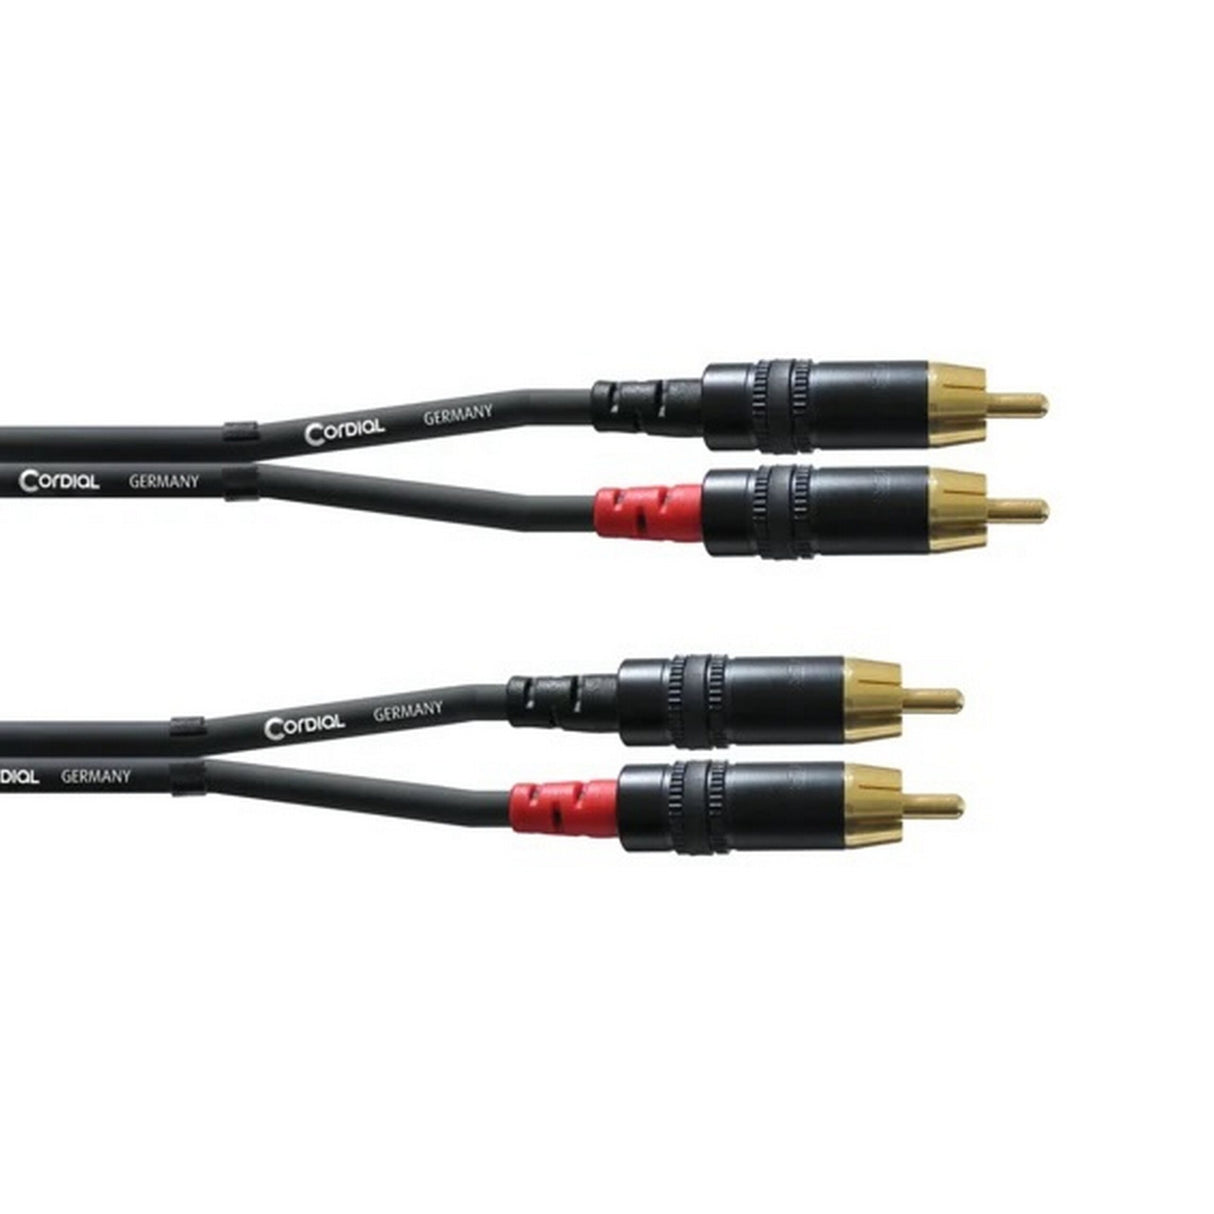 Cordial CFU 0.6 CC 2 x RCA to 2 x RCA Twin Cable/Adapter, Black, 2-Feet